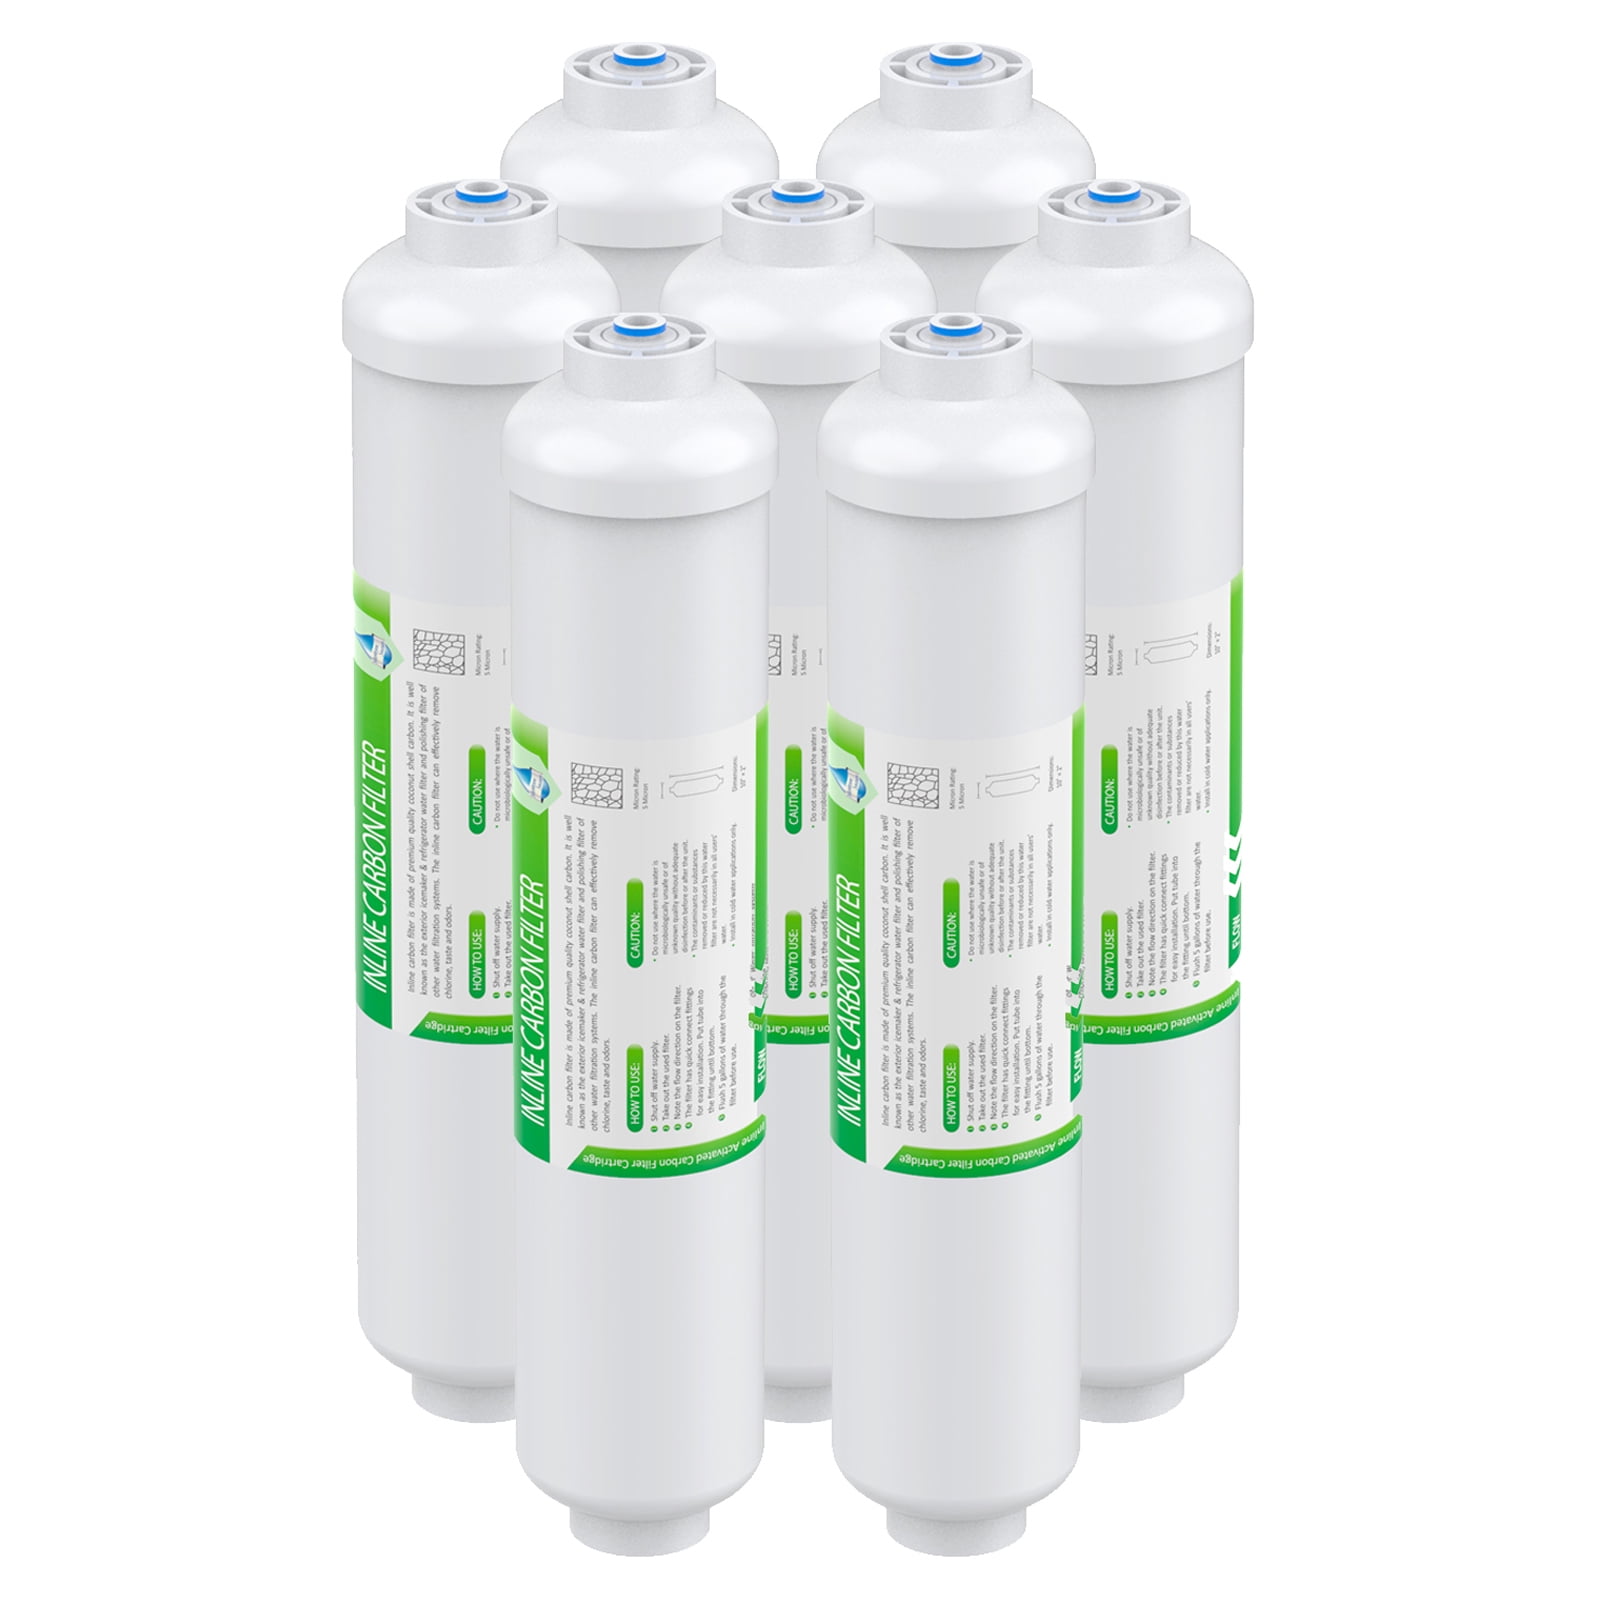 Water Filter Supplier, Water Filter Manufacturer